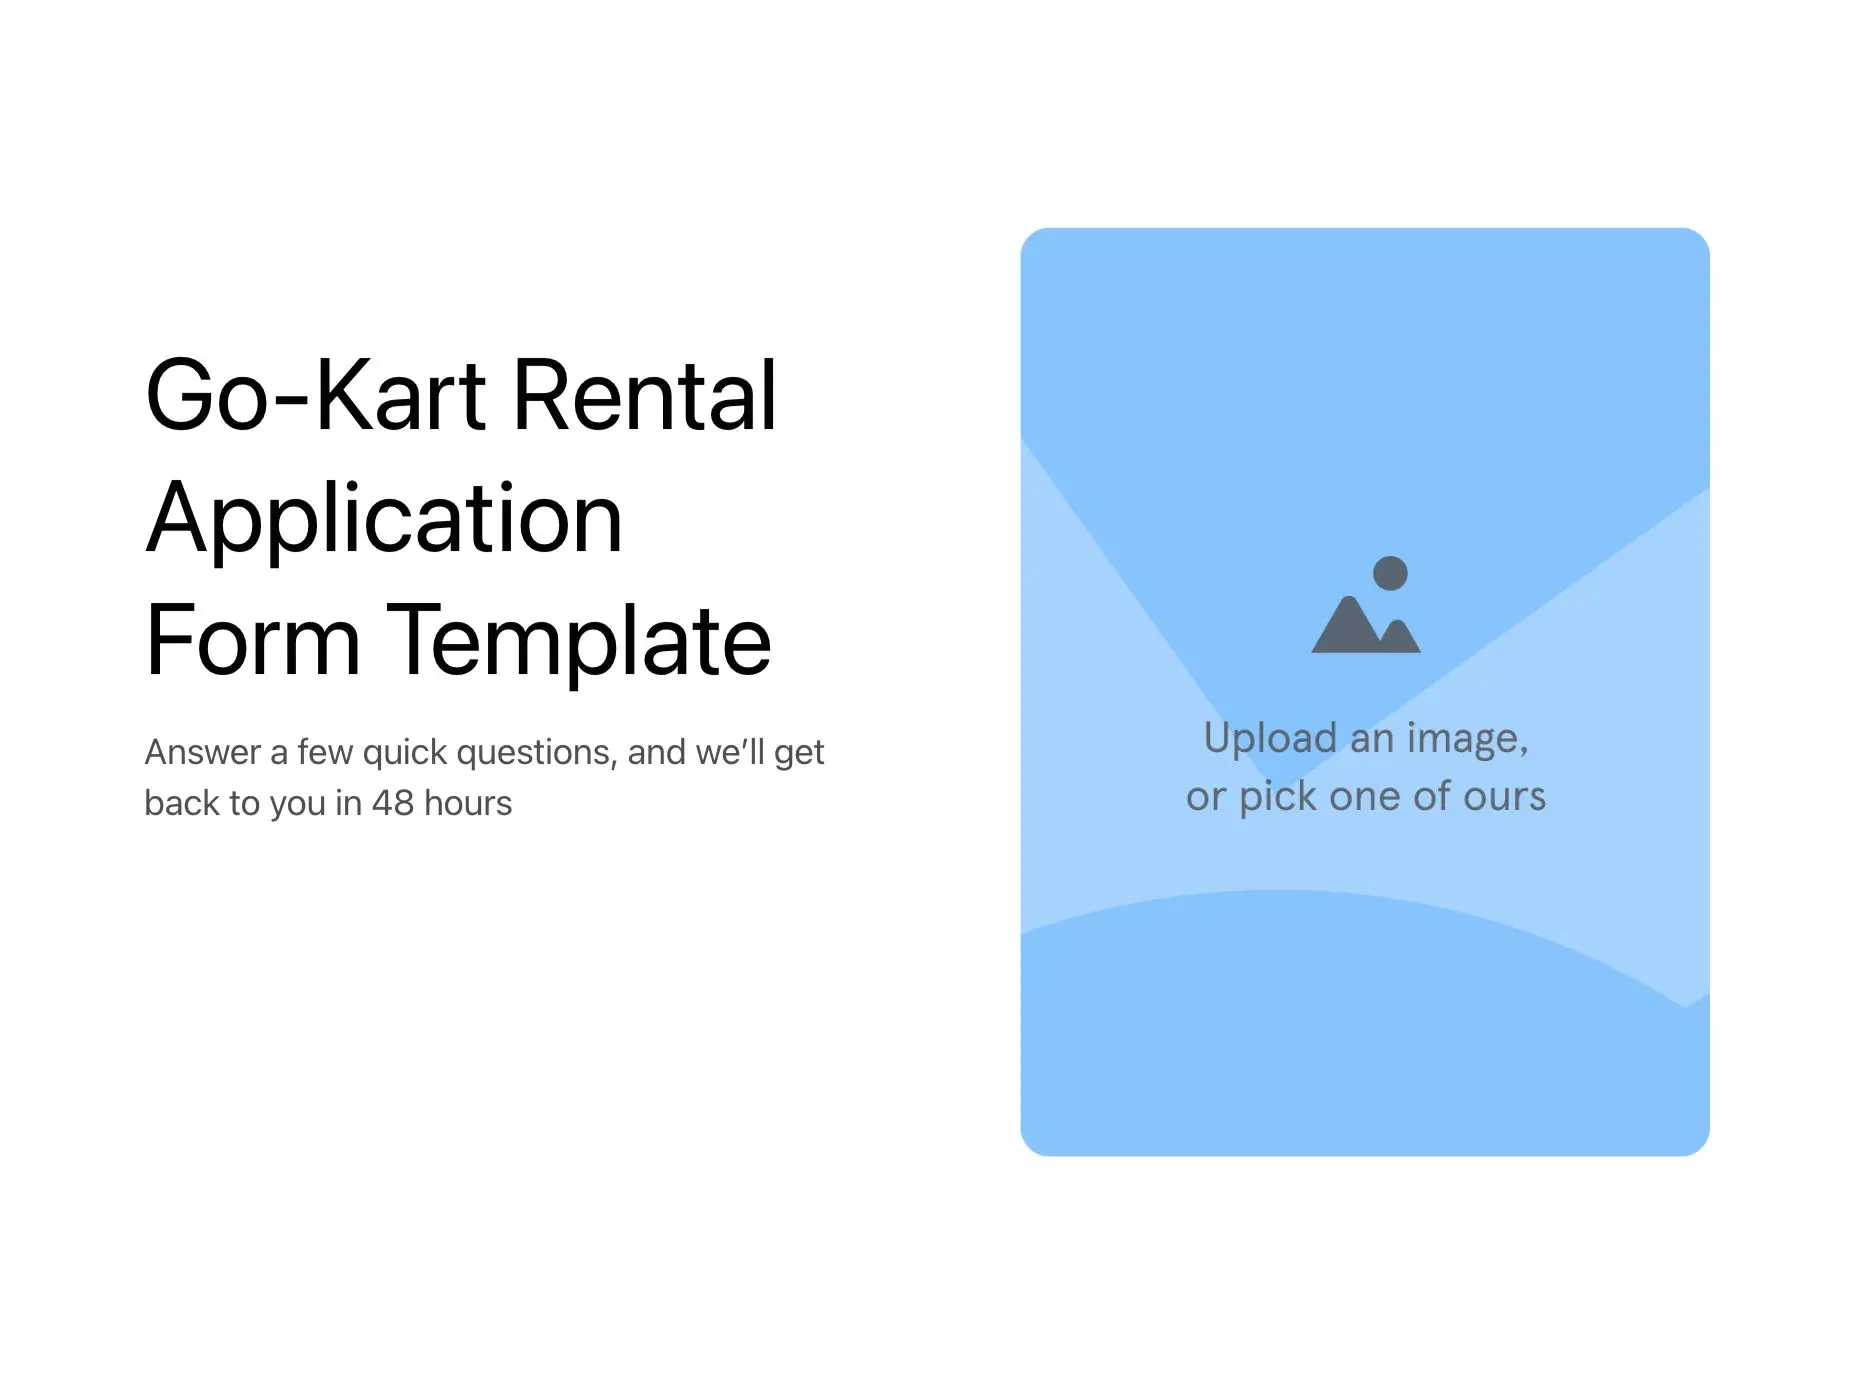 Go-Kart Rental Application Form Template Hero